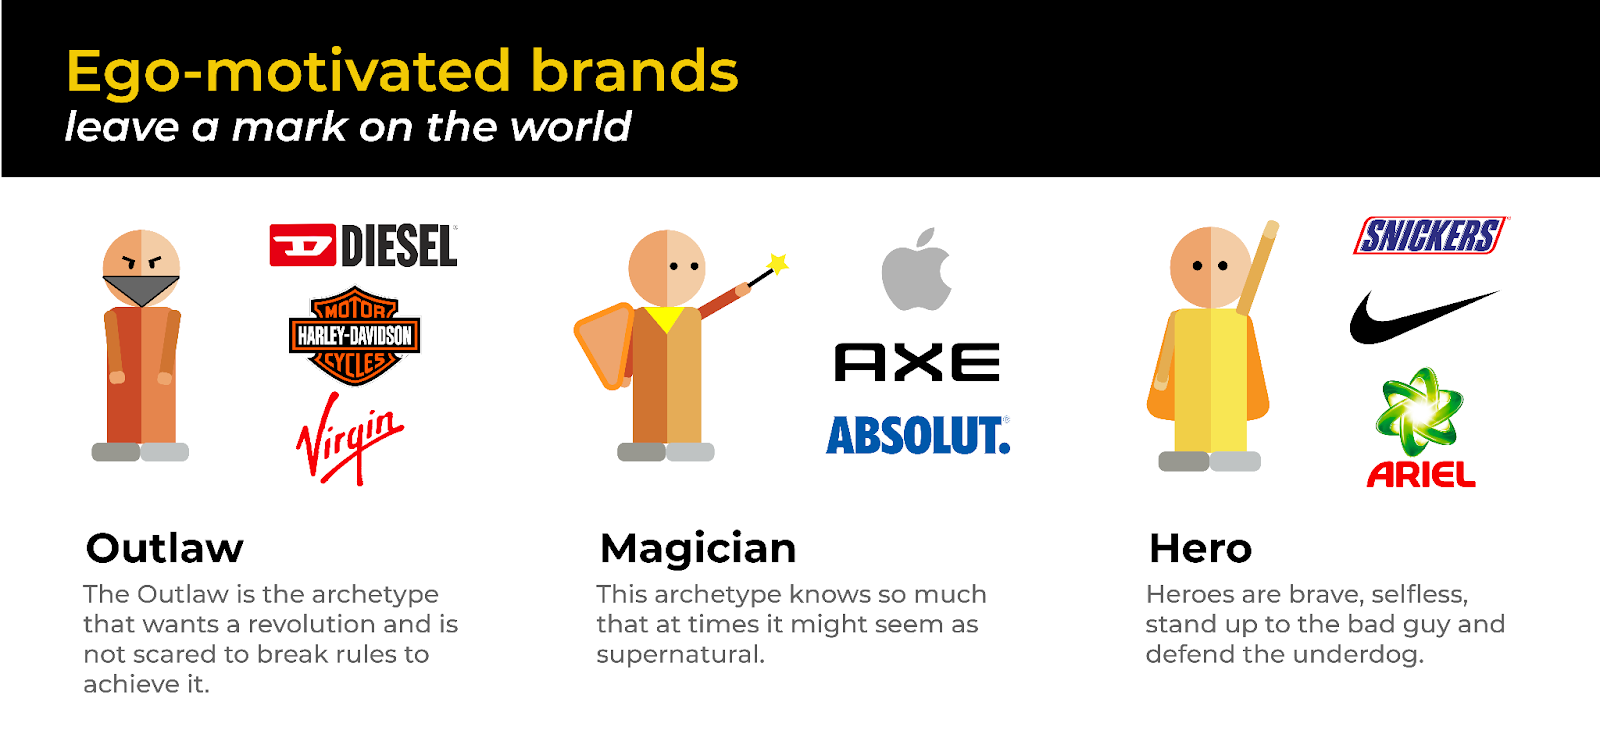 ego-motivated brands